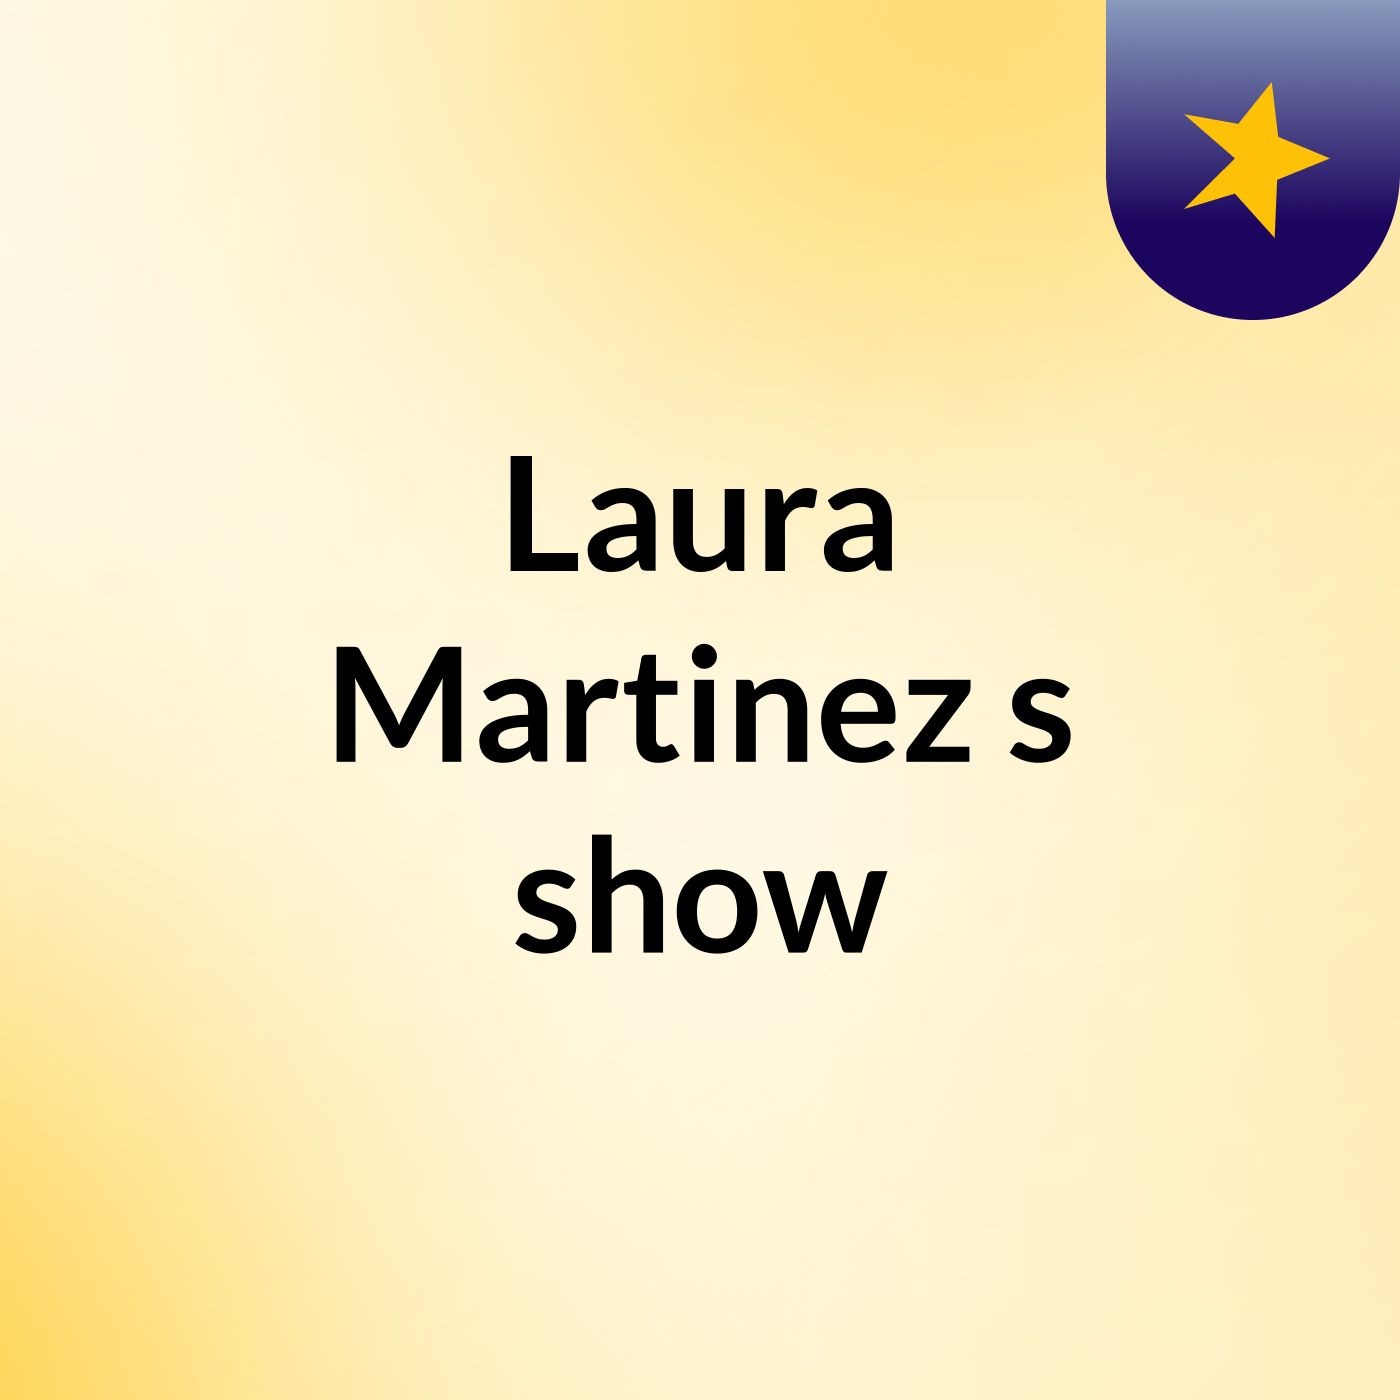 Laura Martinez's show